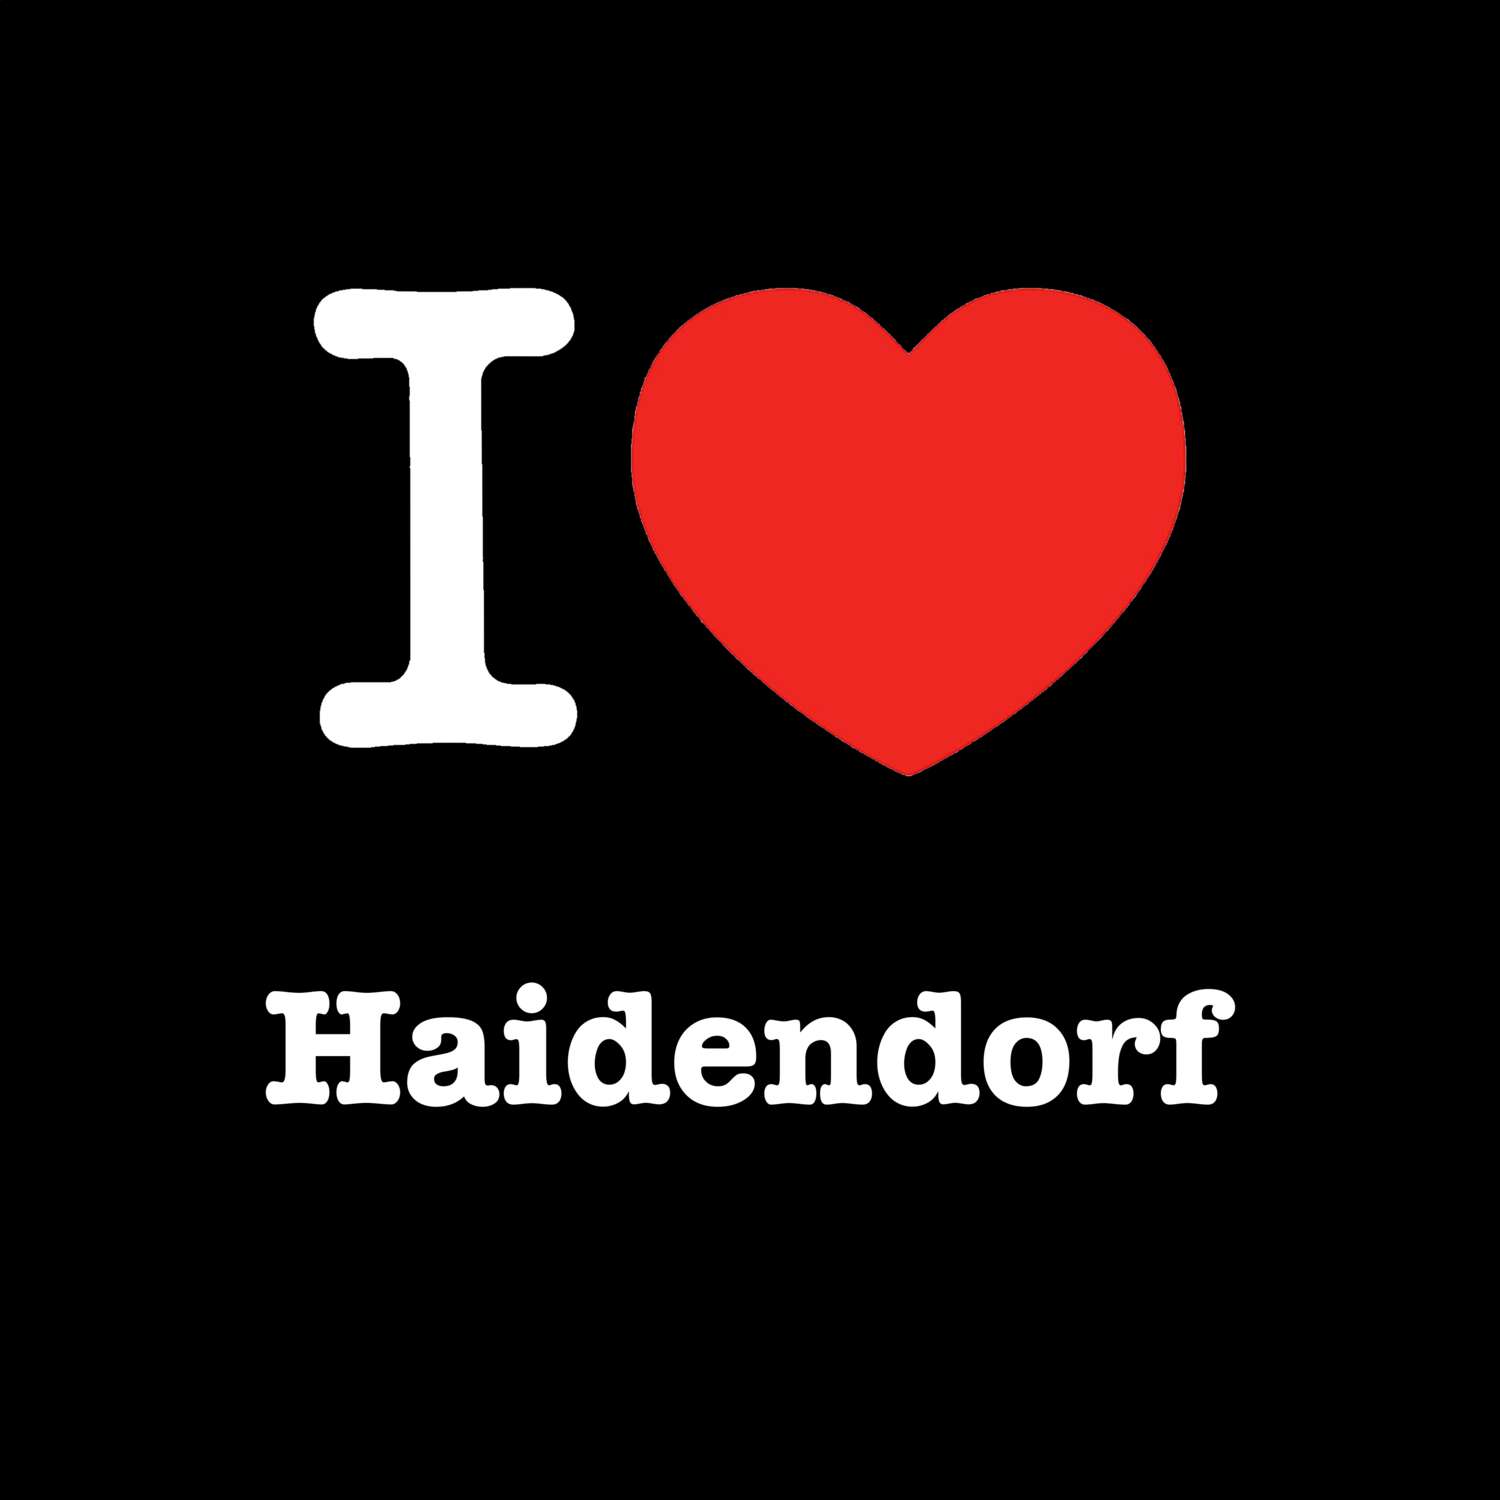 Haidendorf T-Shirt »I love«